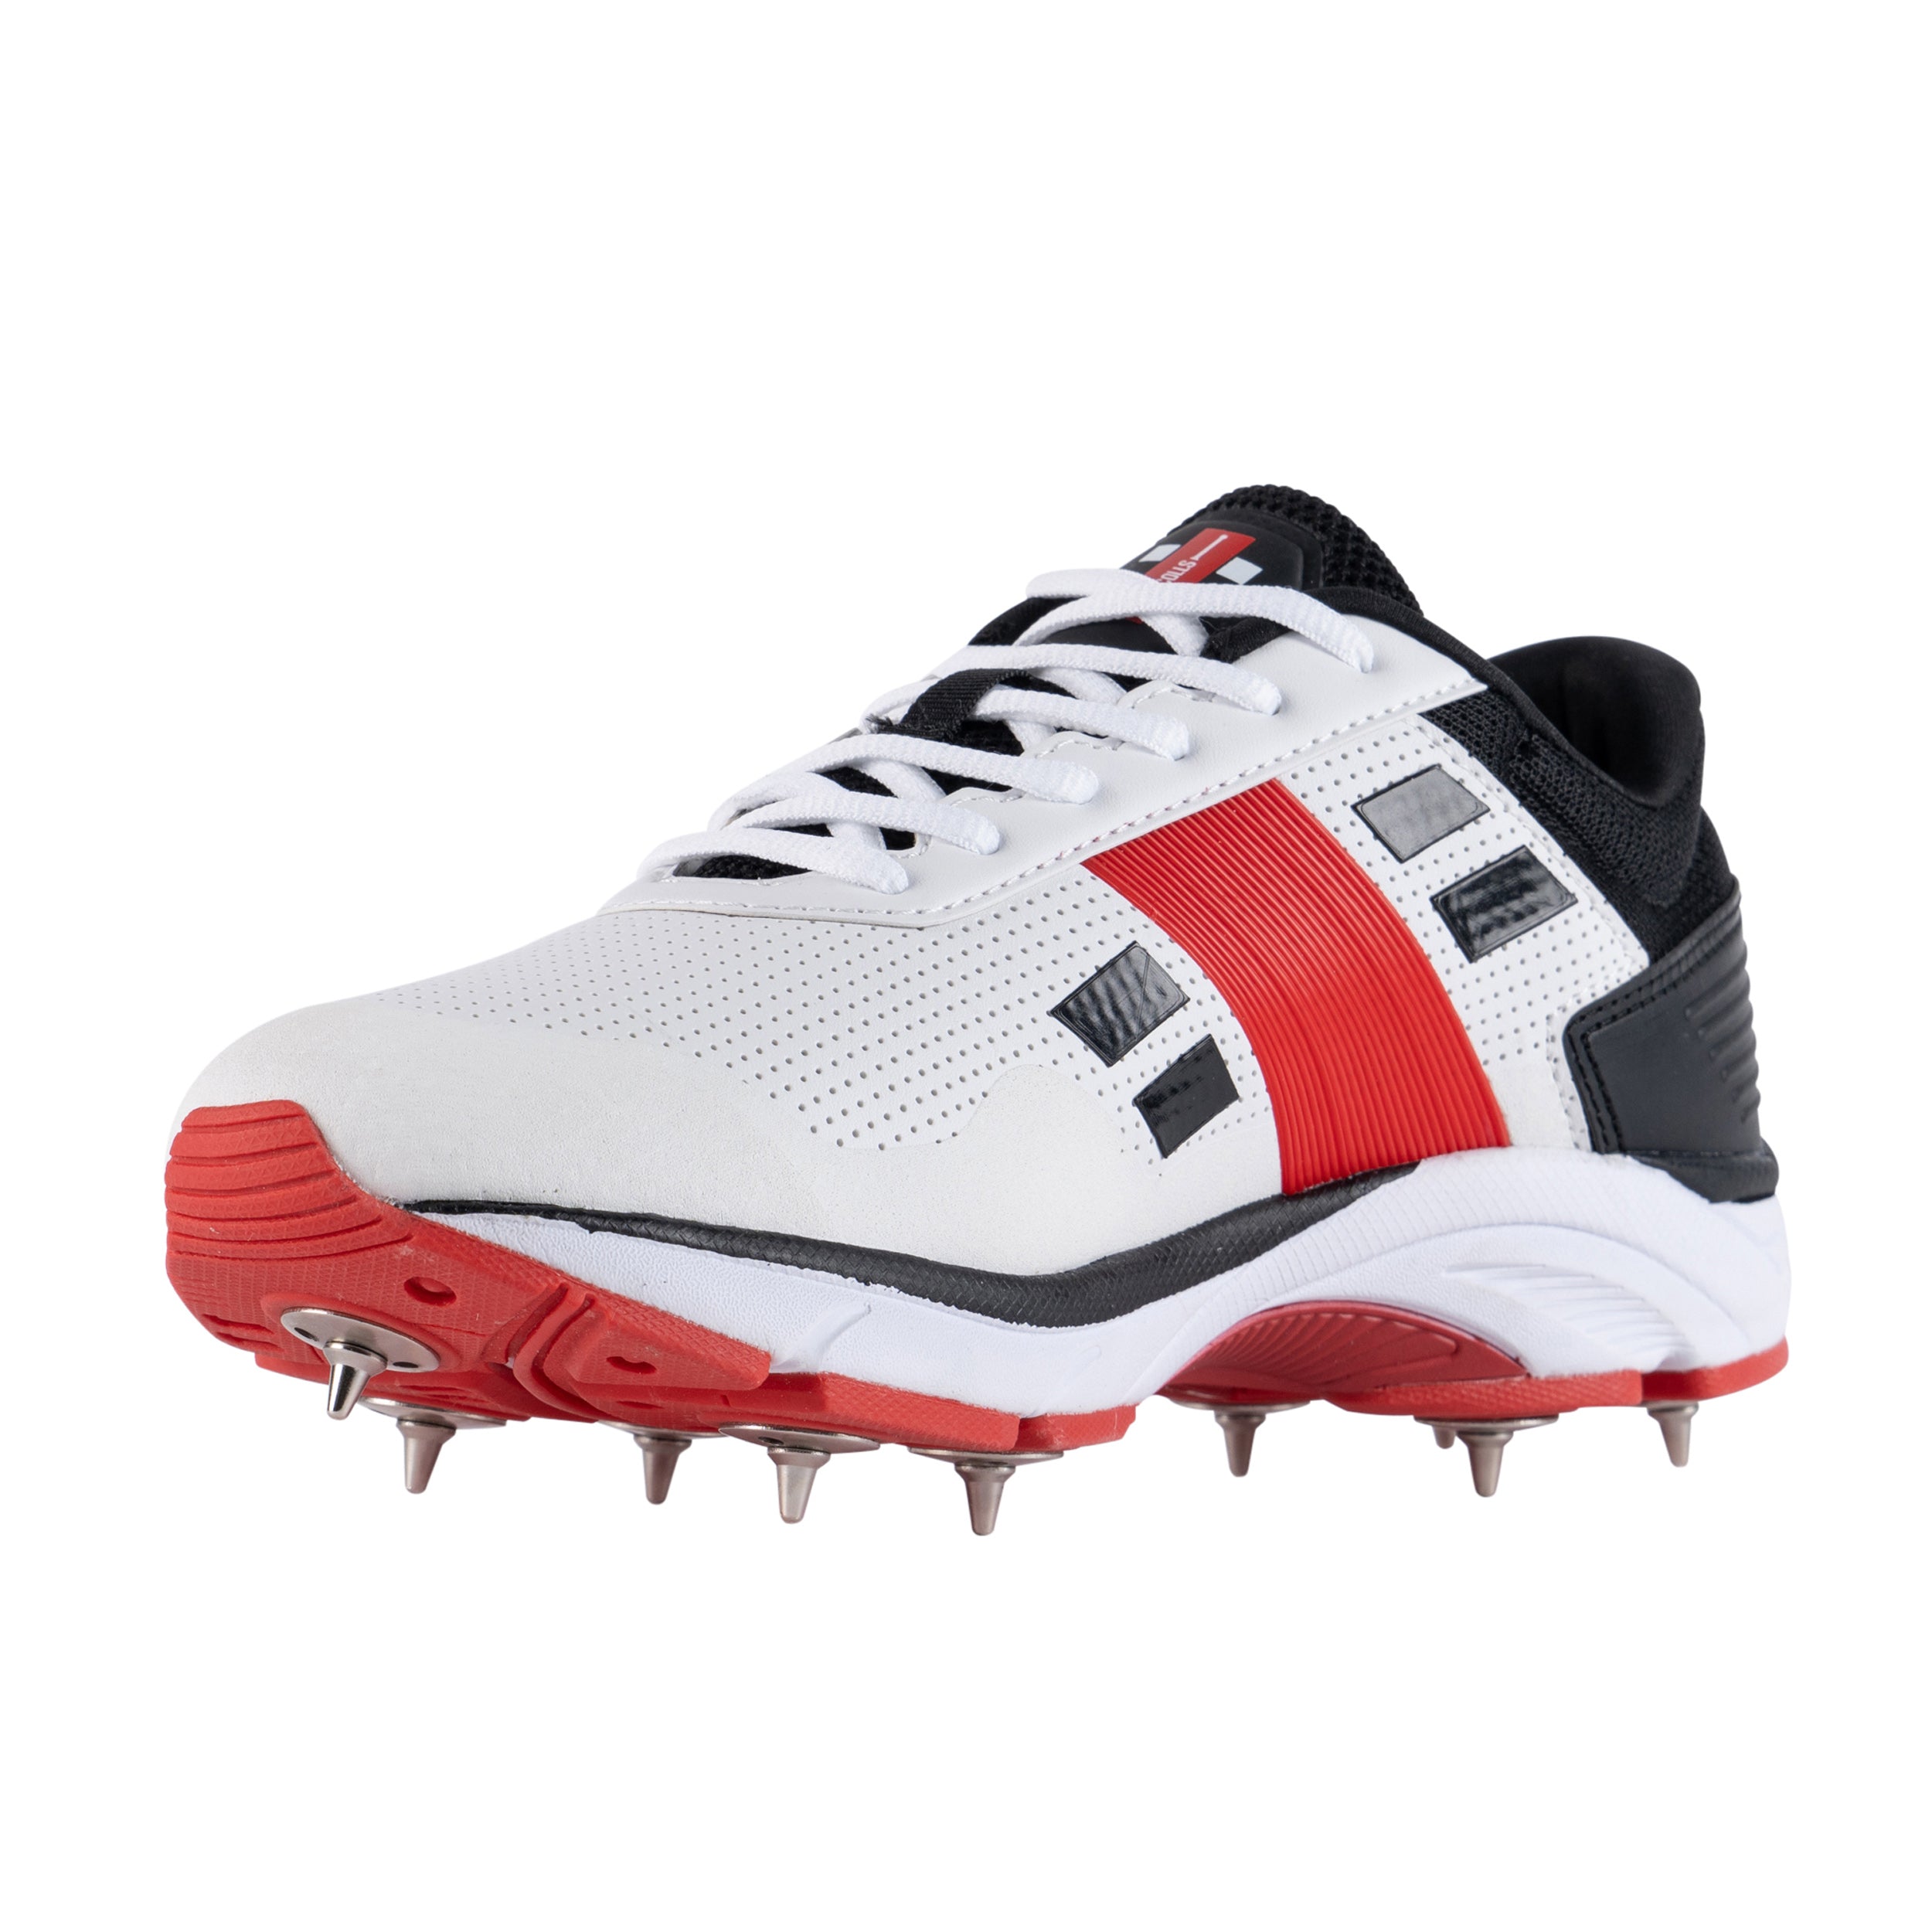 Gray Nicolls Velocity 4.0 Full Spike Cricket Shoes - Senior